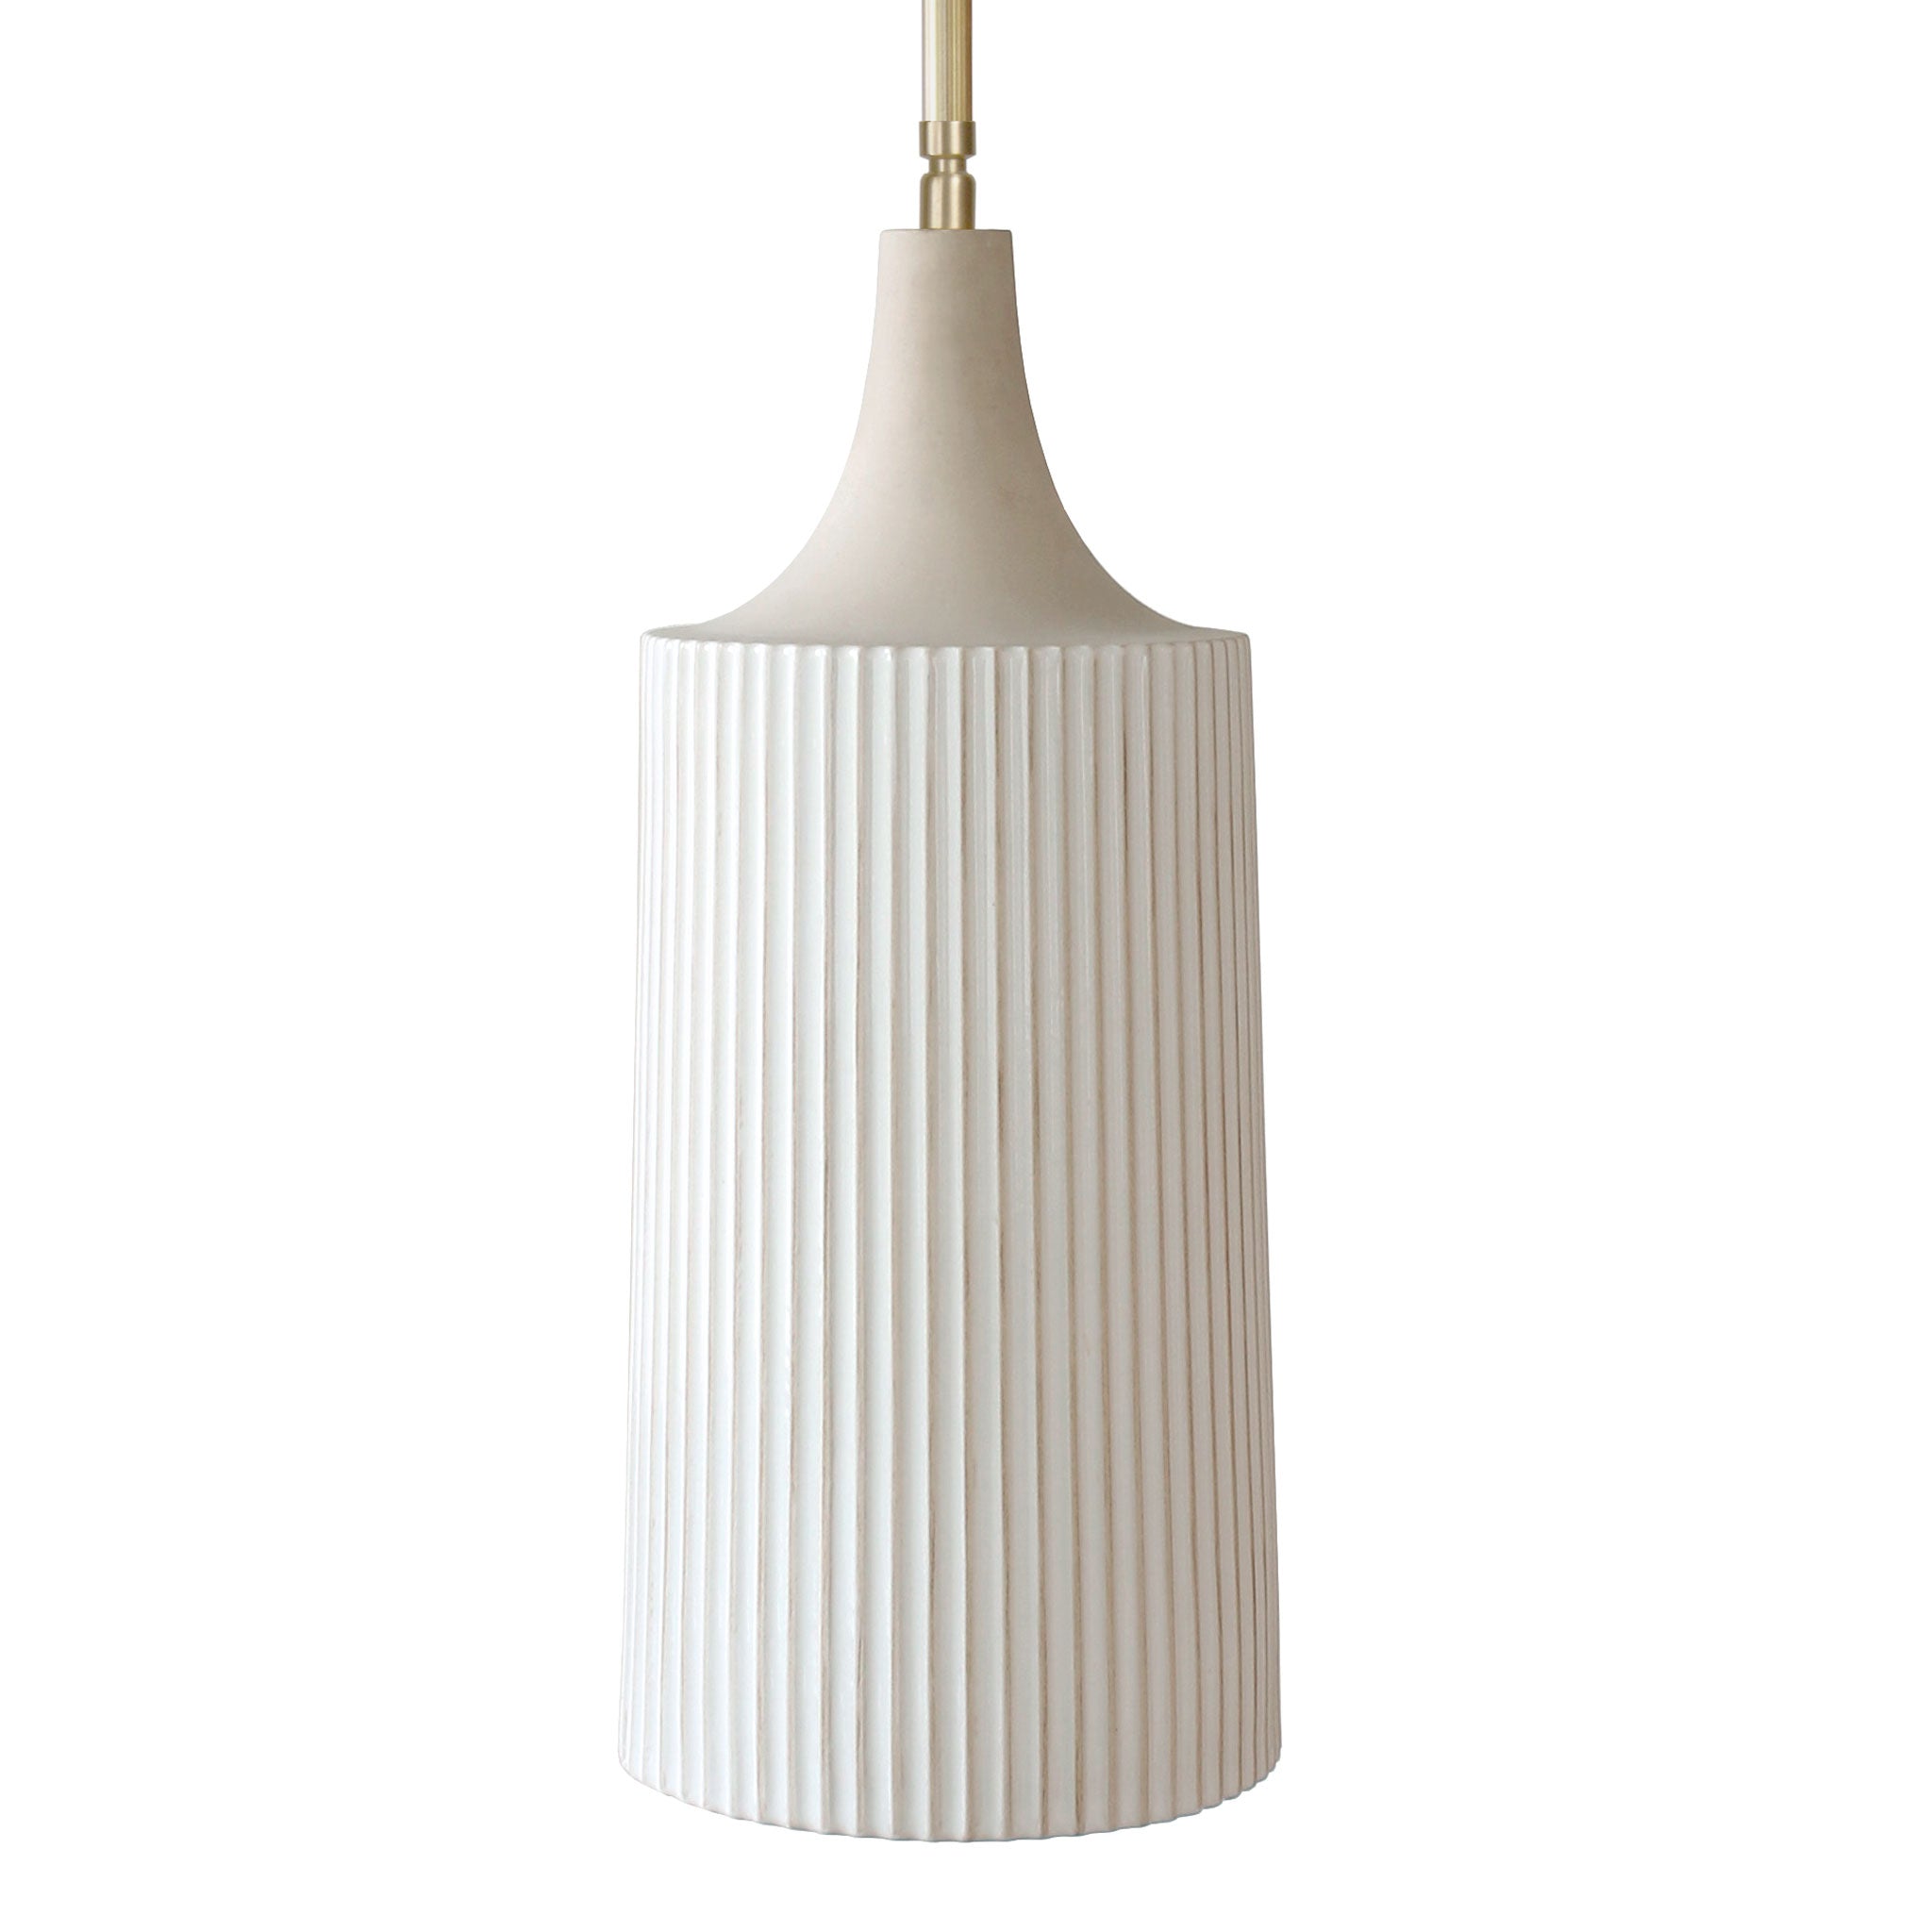 Tumwater Large Ceramic Pendant Light by Cedar & Moss